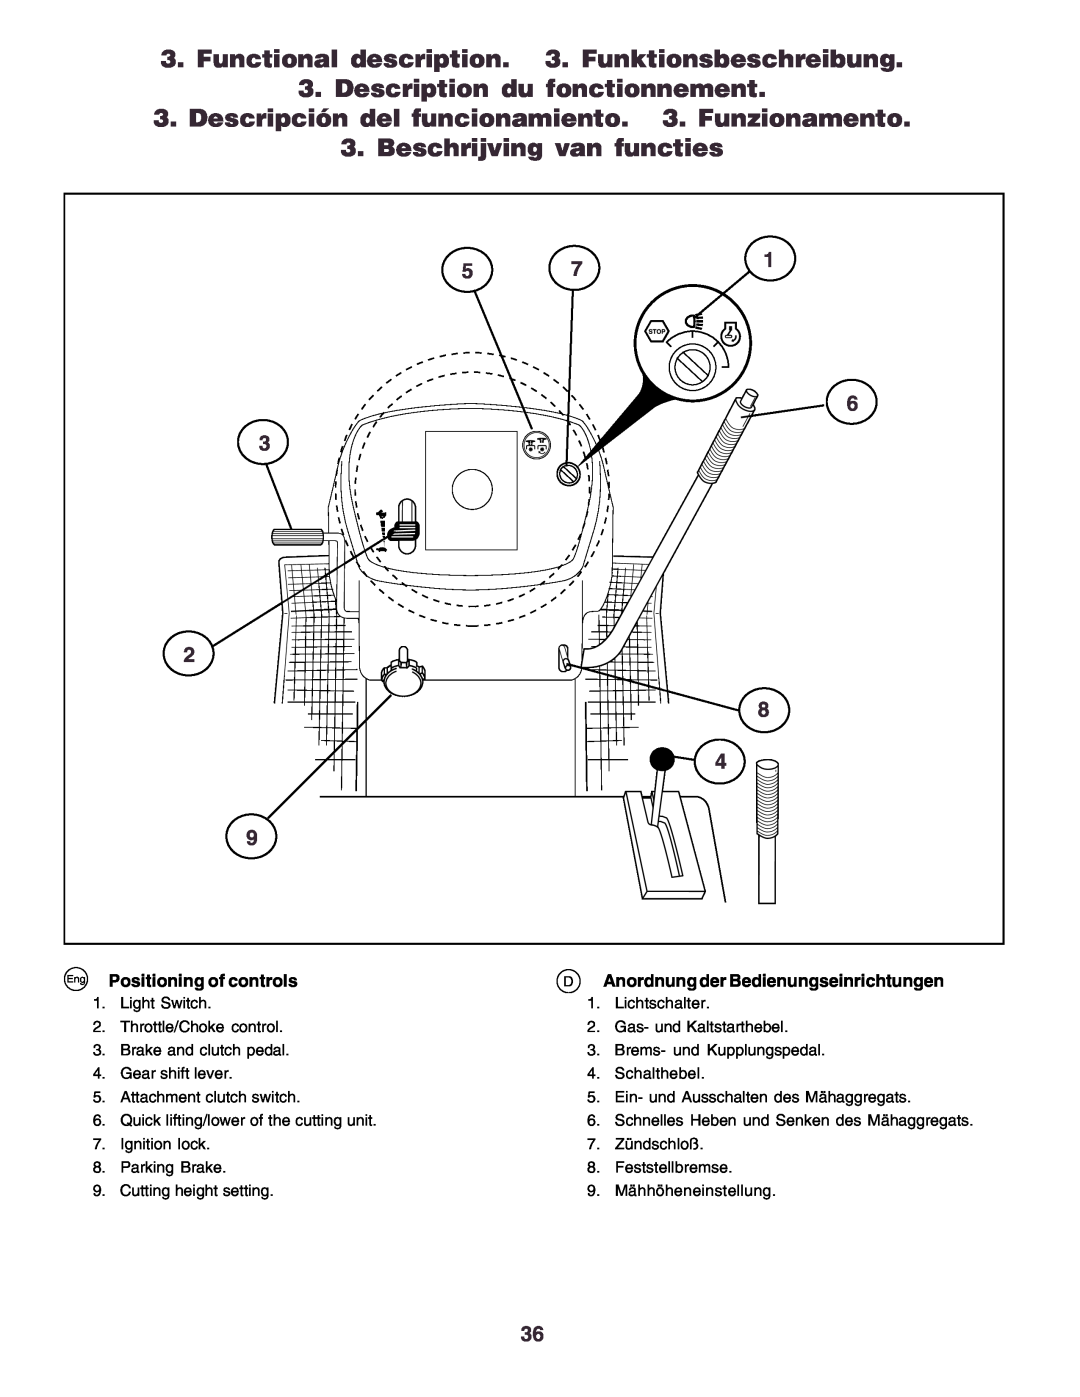 Husqvarna CT160 instruction manual Description du fonctionnement, Beschrijving van functies, Positioning of controls 